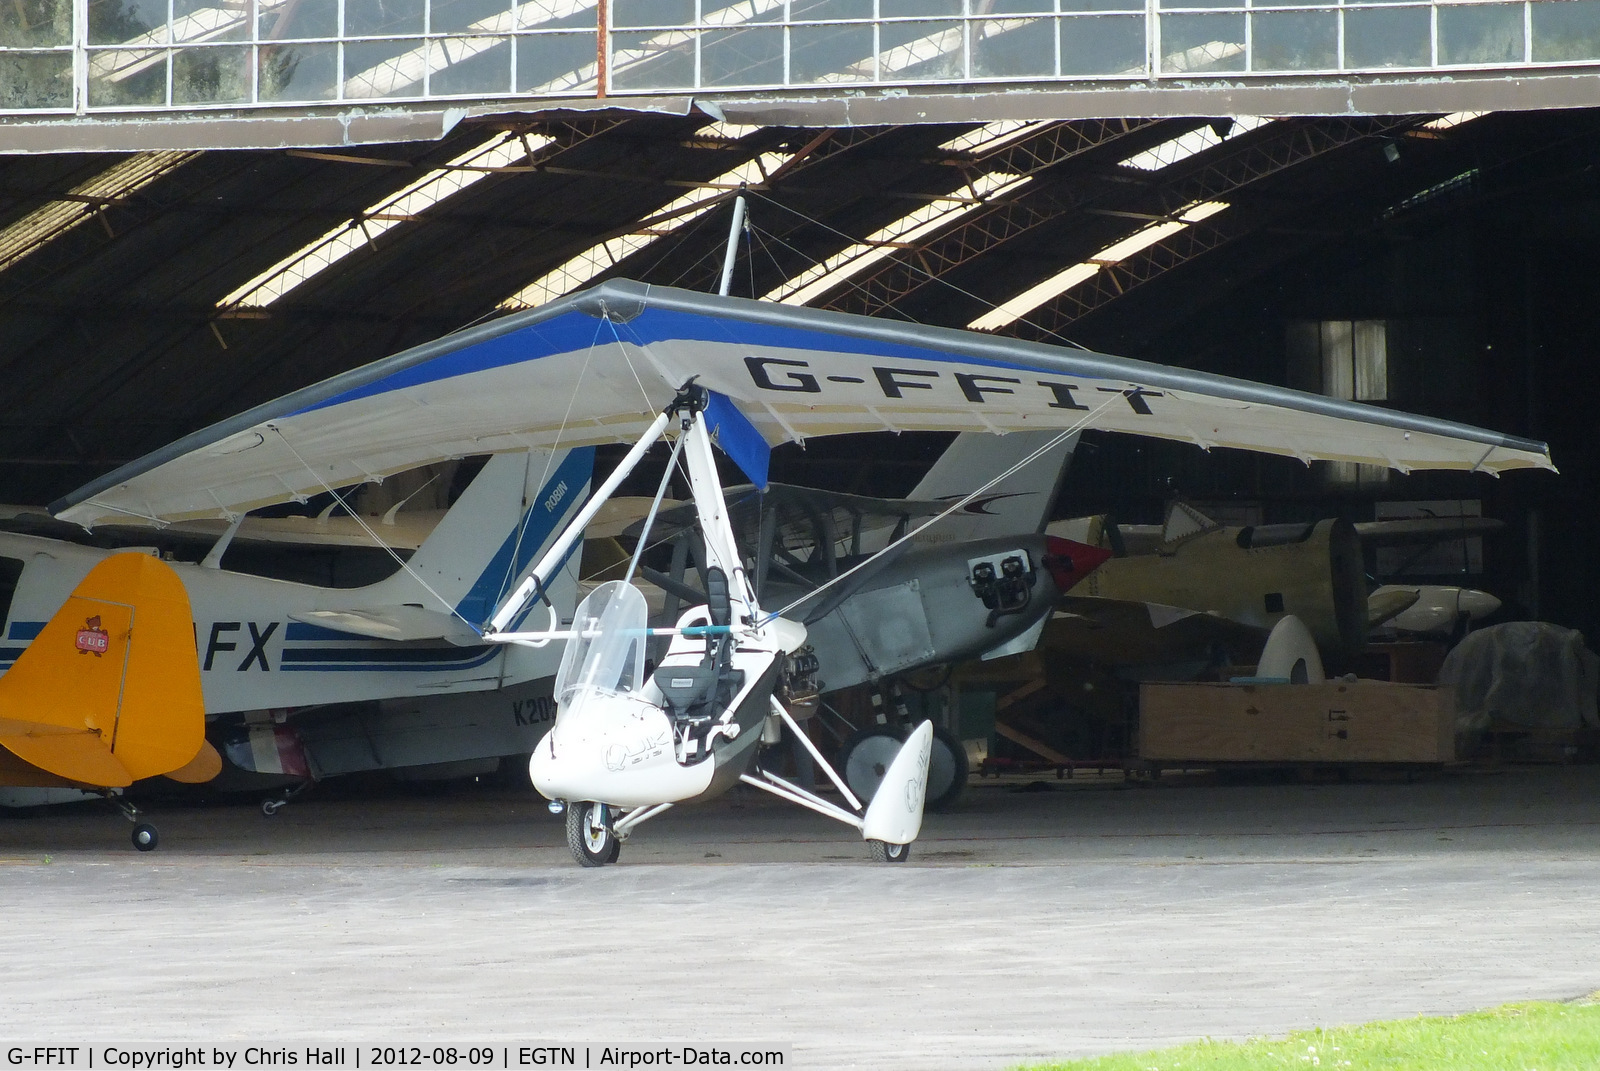 G-FFIT, 2007 P&M Aviation Pegasus Quik C/N 8238, at Enstone Airfield